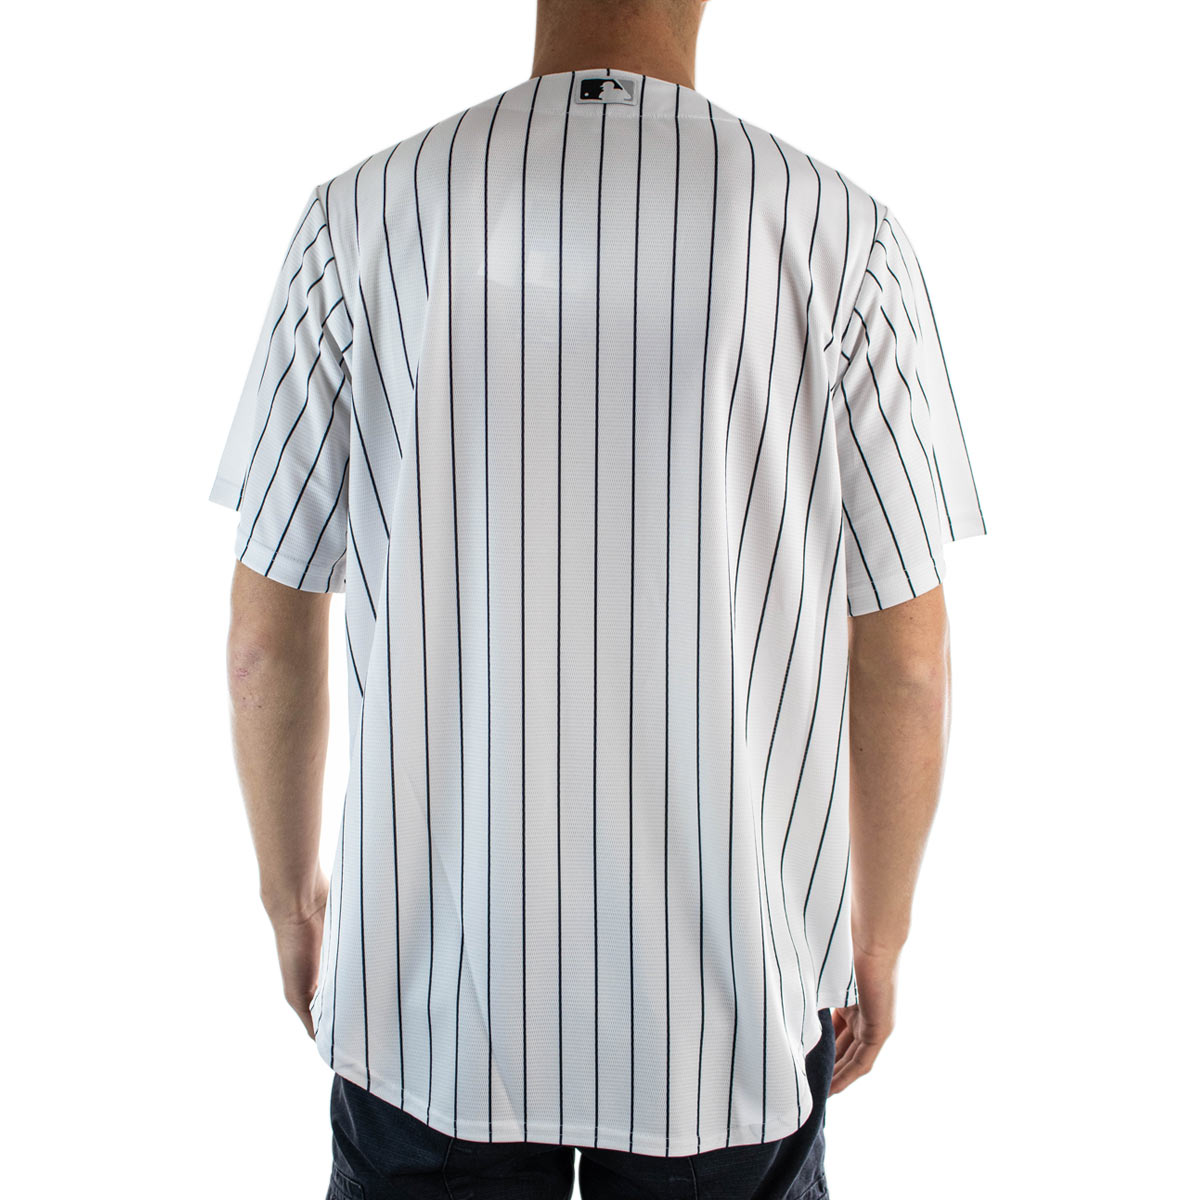 Nike Chicago White Sox MLB Men's Replica Baseball Shirt White  T770-RXWH-RX-XVH